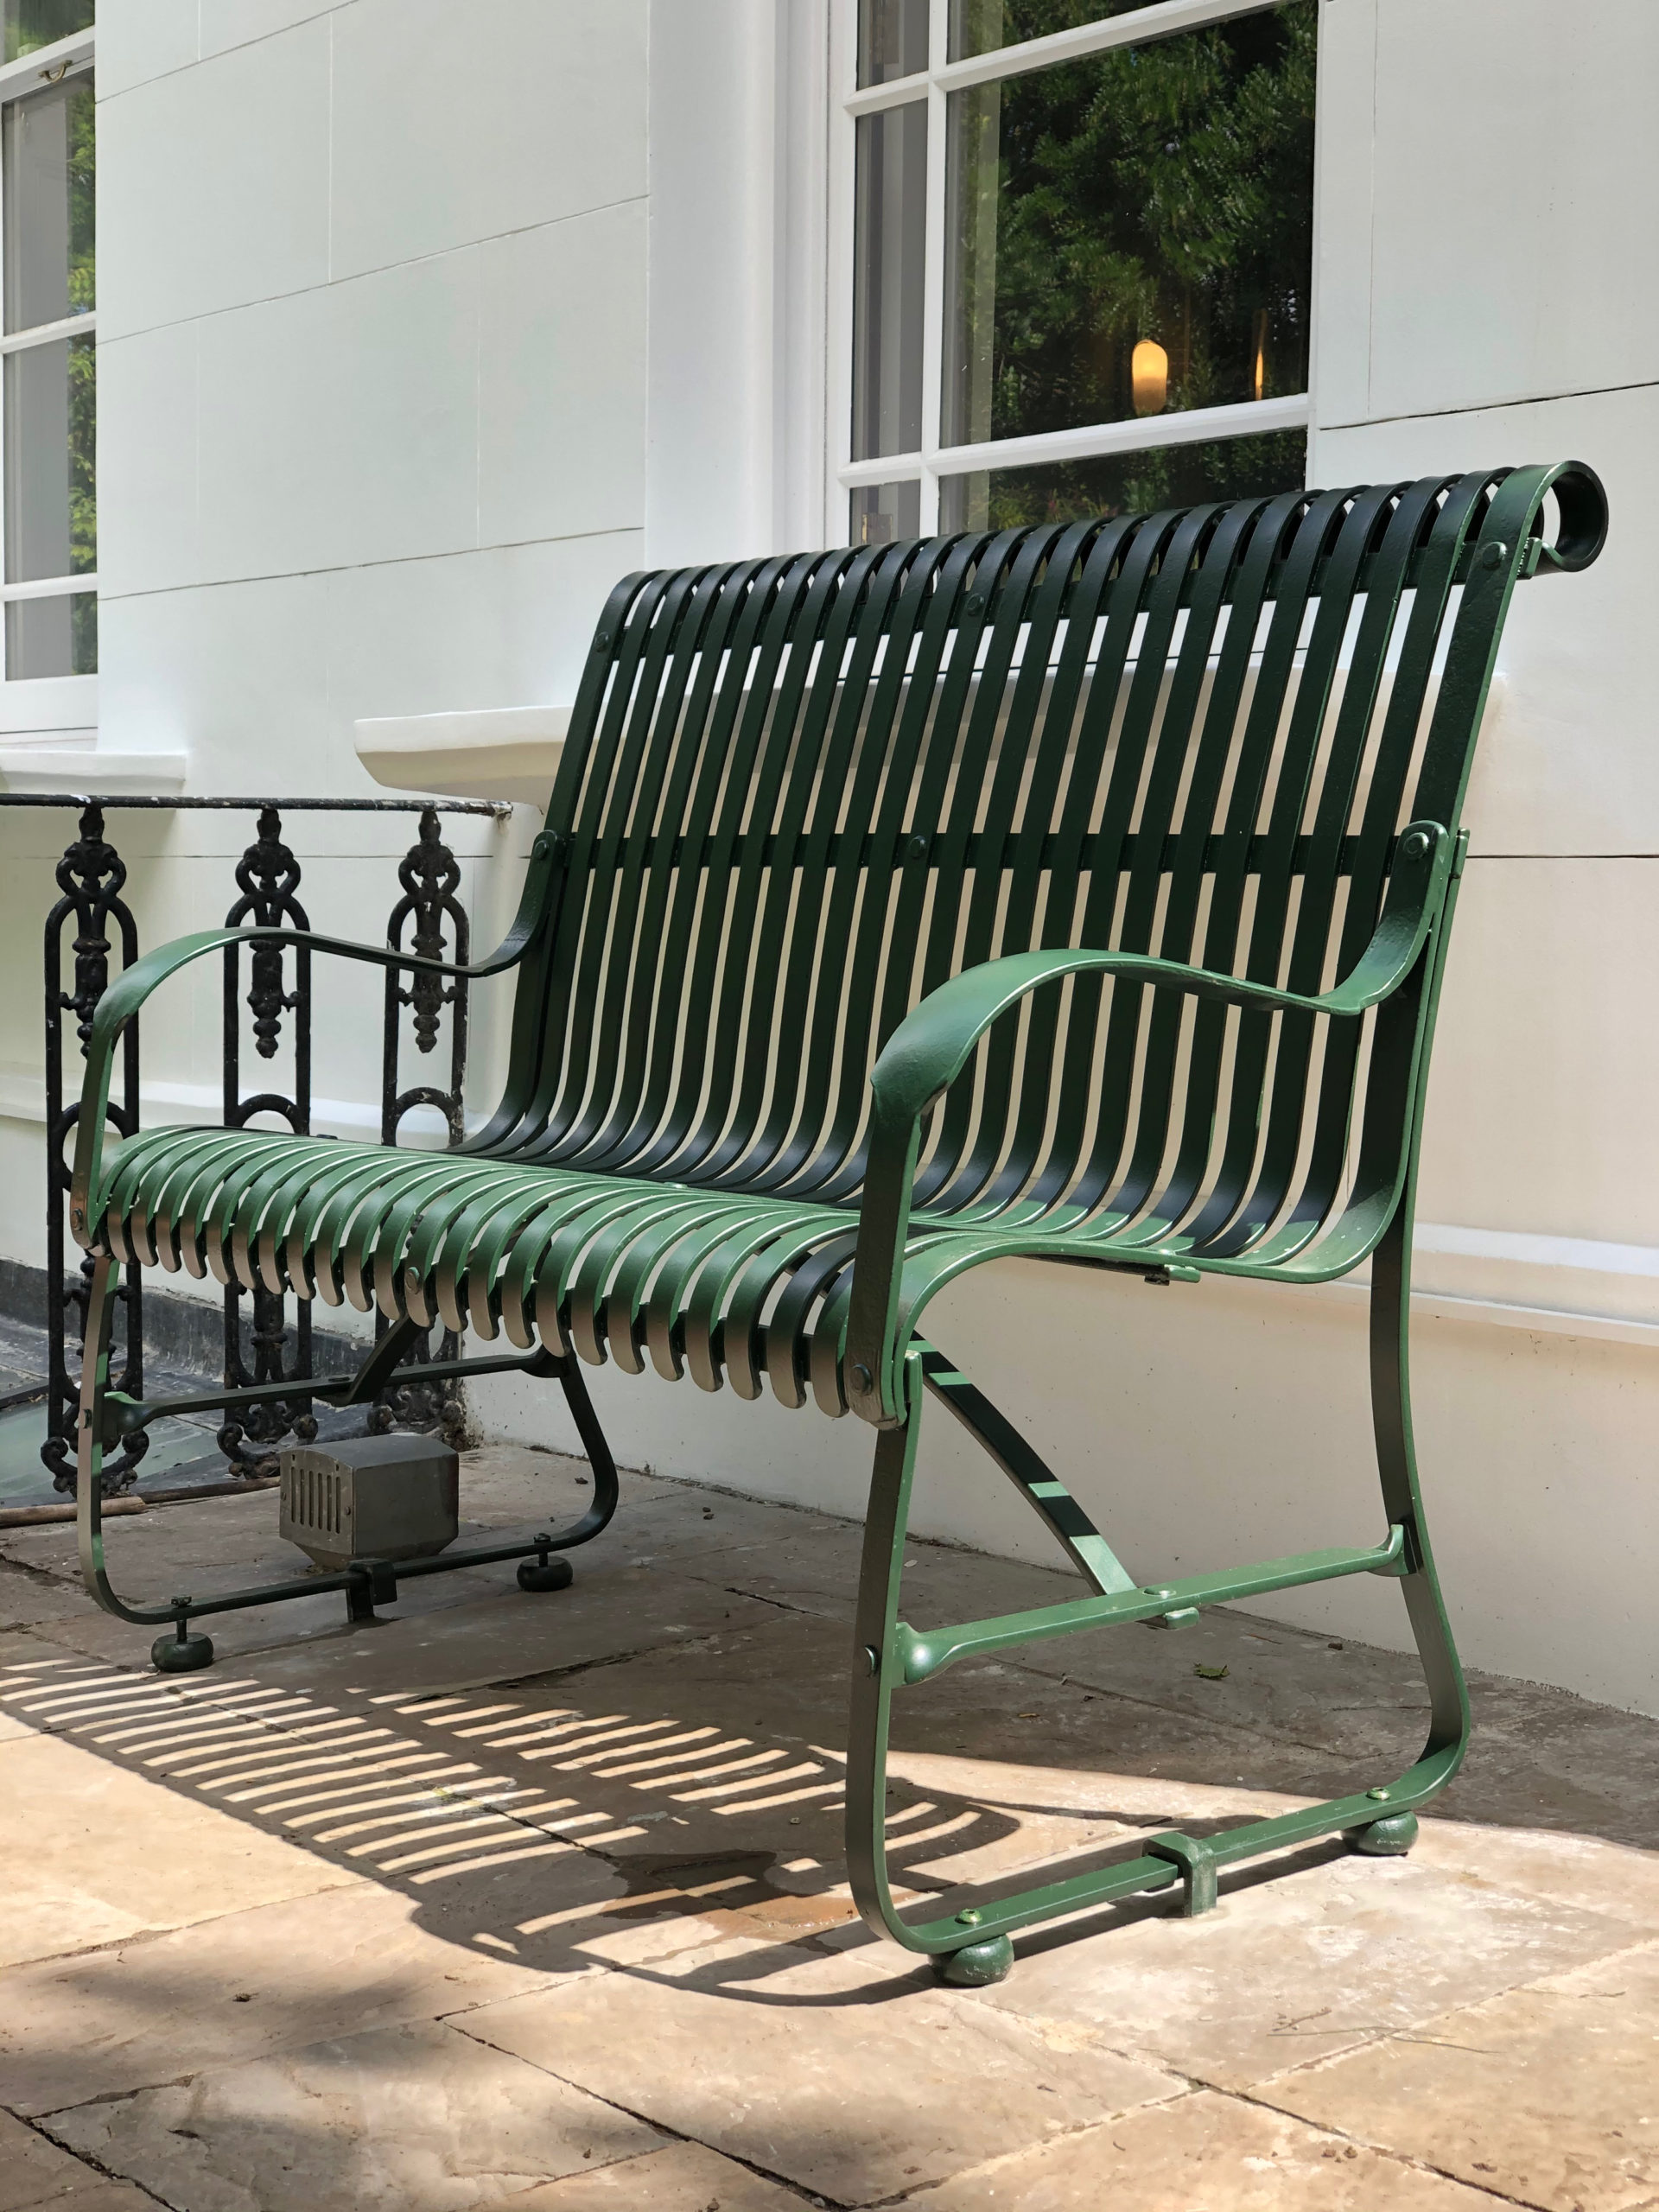 Primrose Hill garden bench